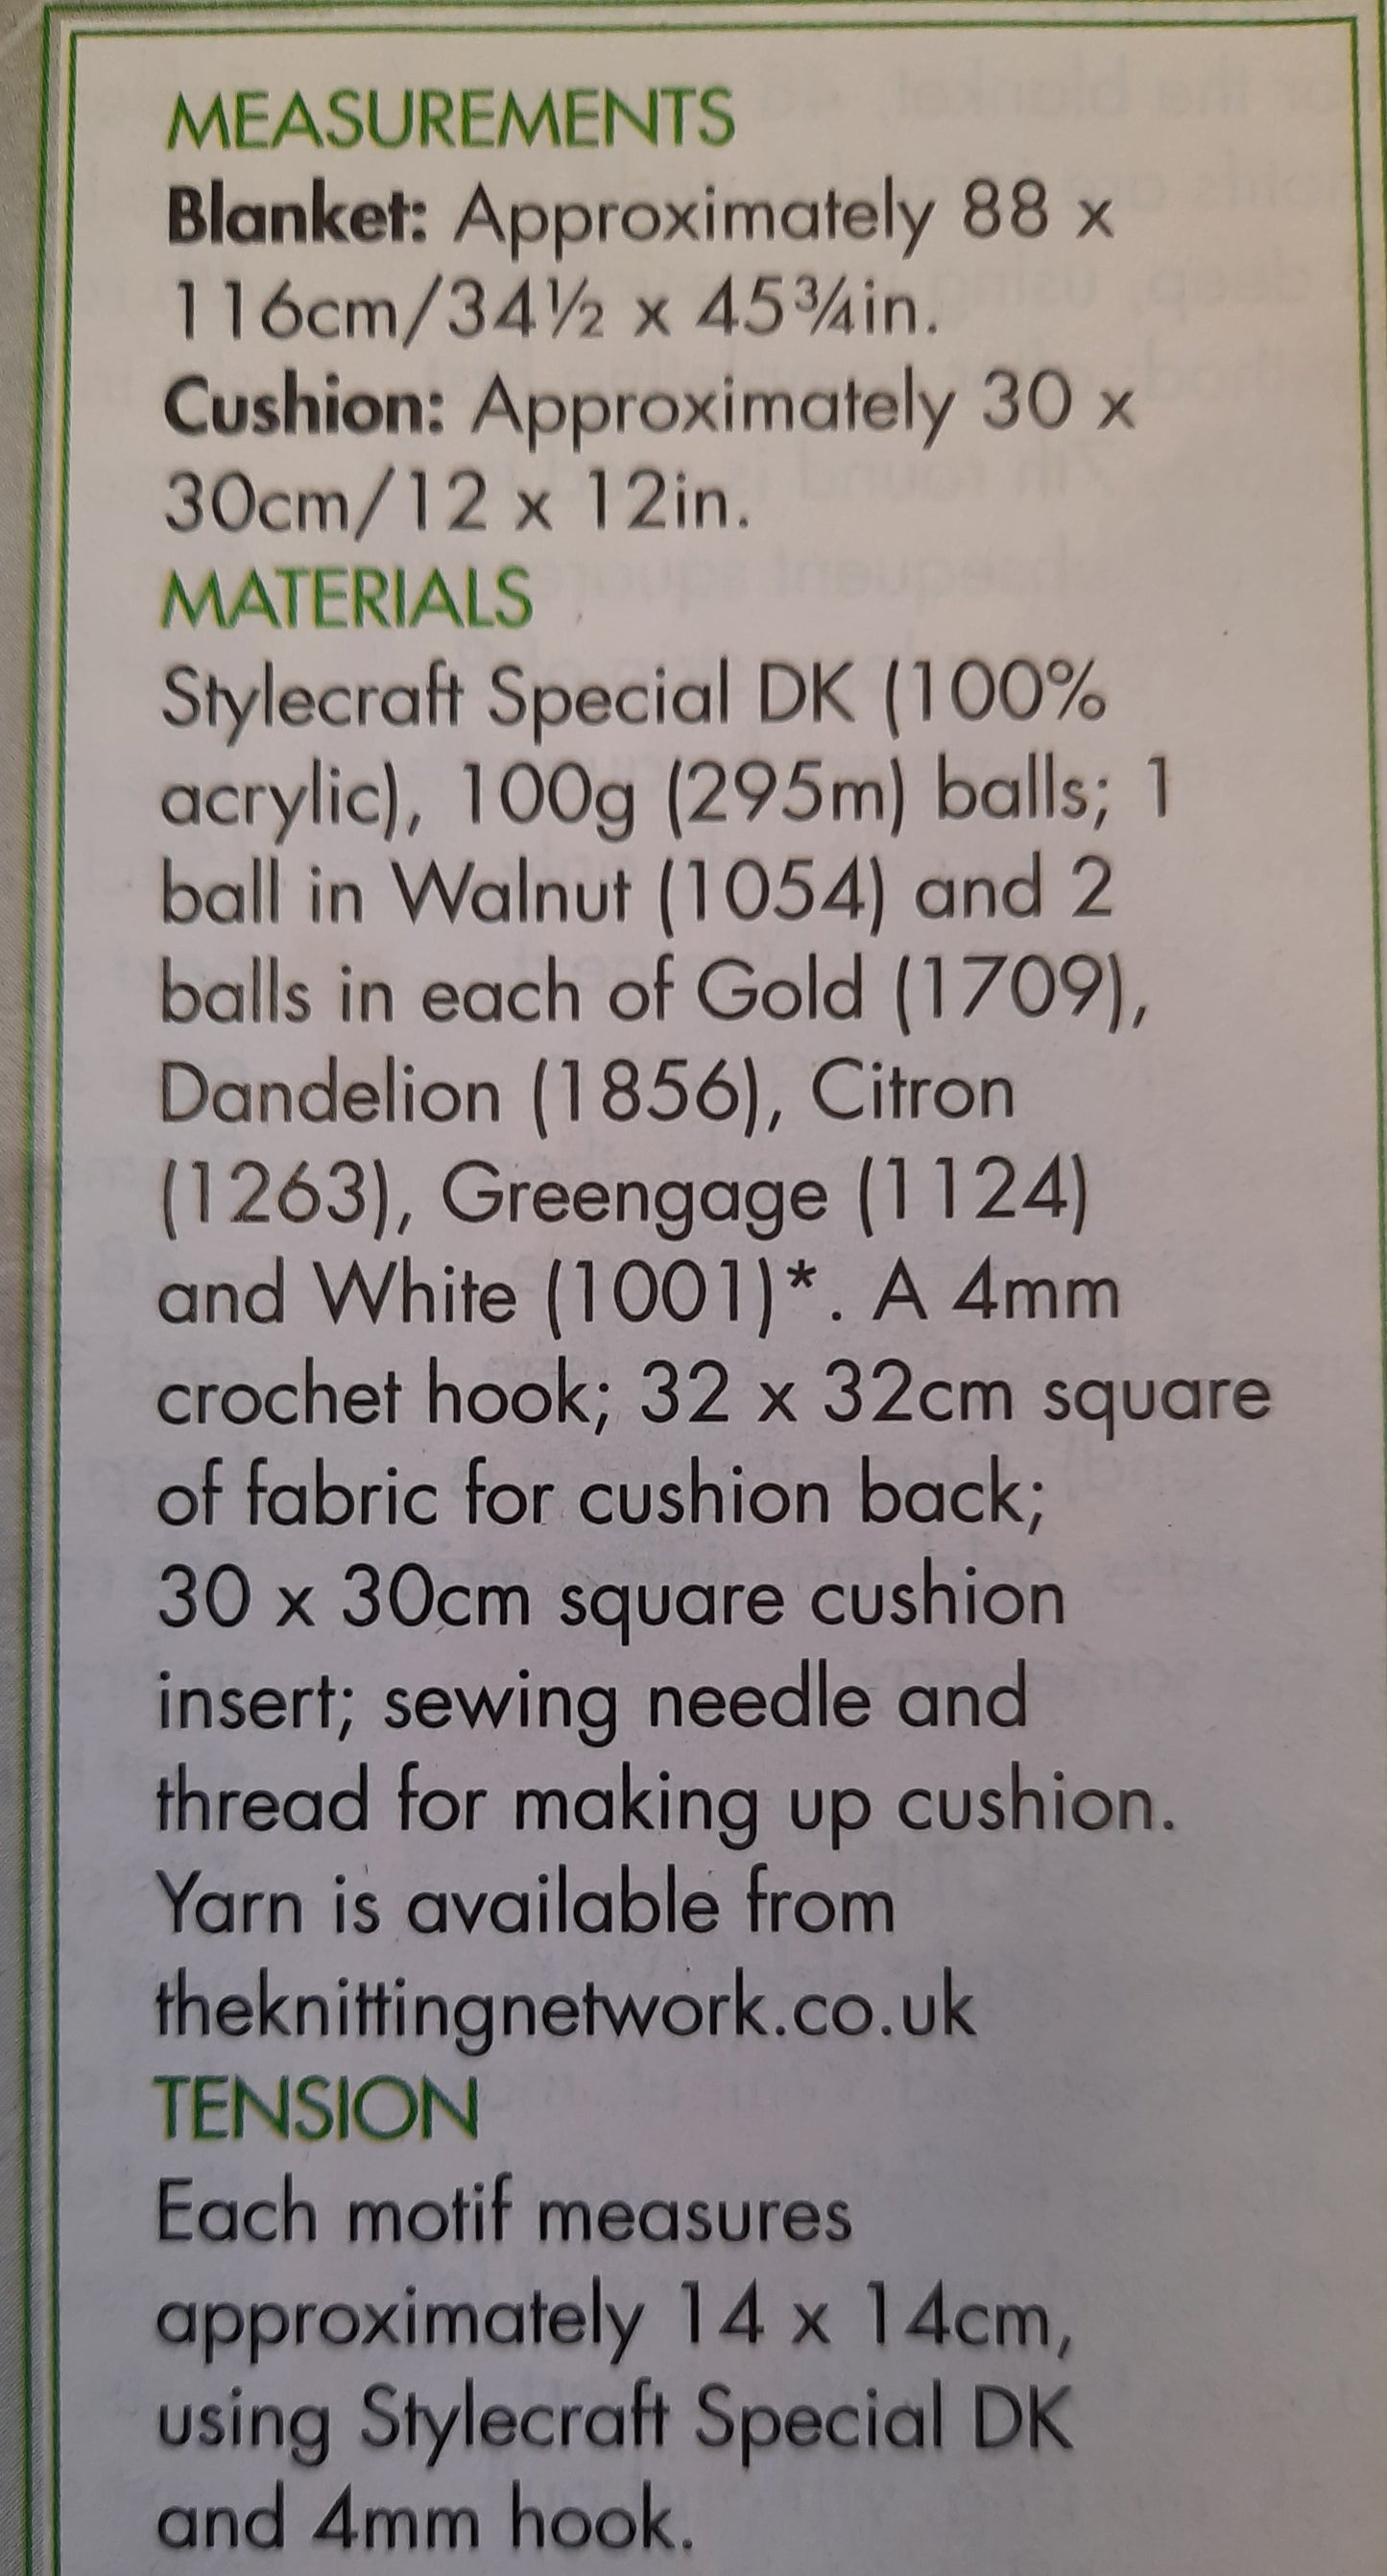 Woman's Weekly "In Full Bloom" Crochet Blanket Kit